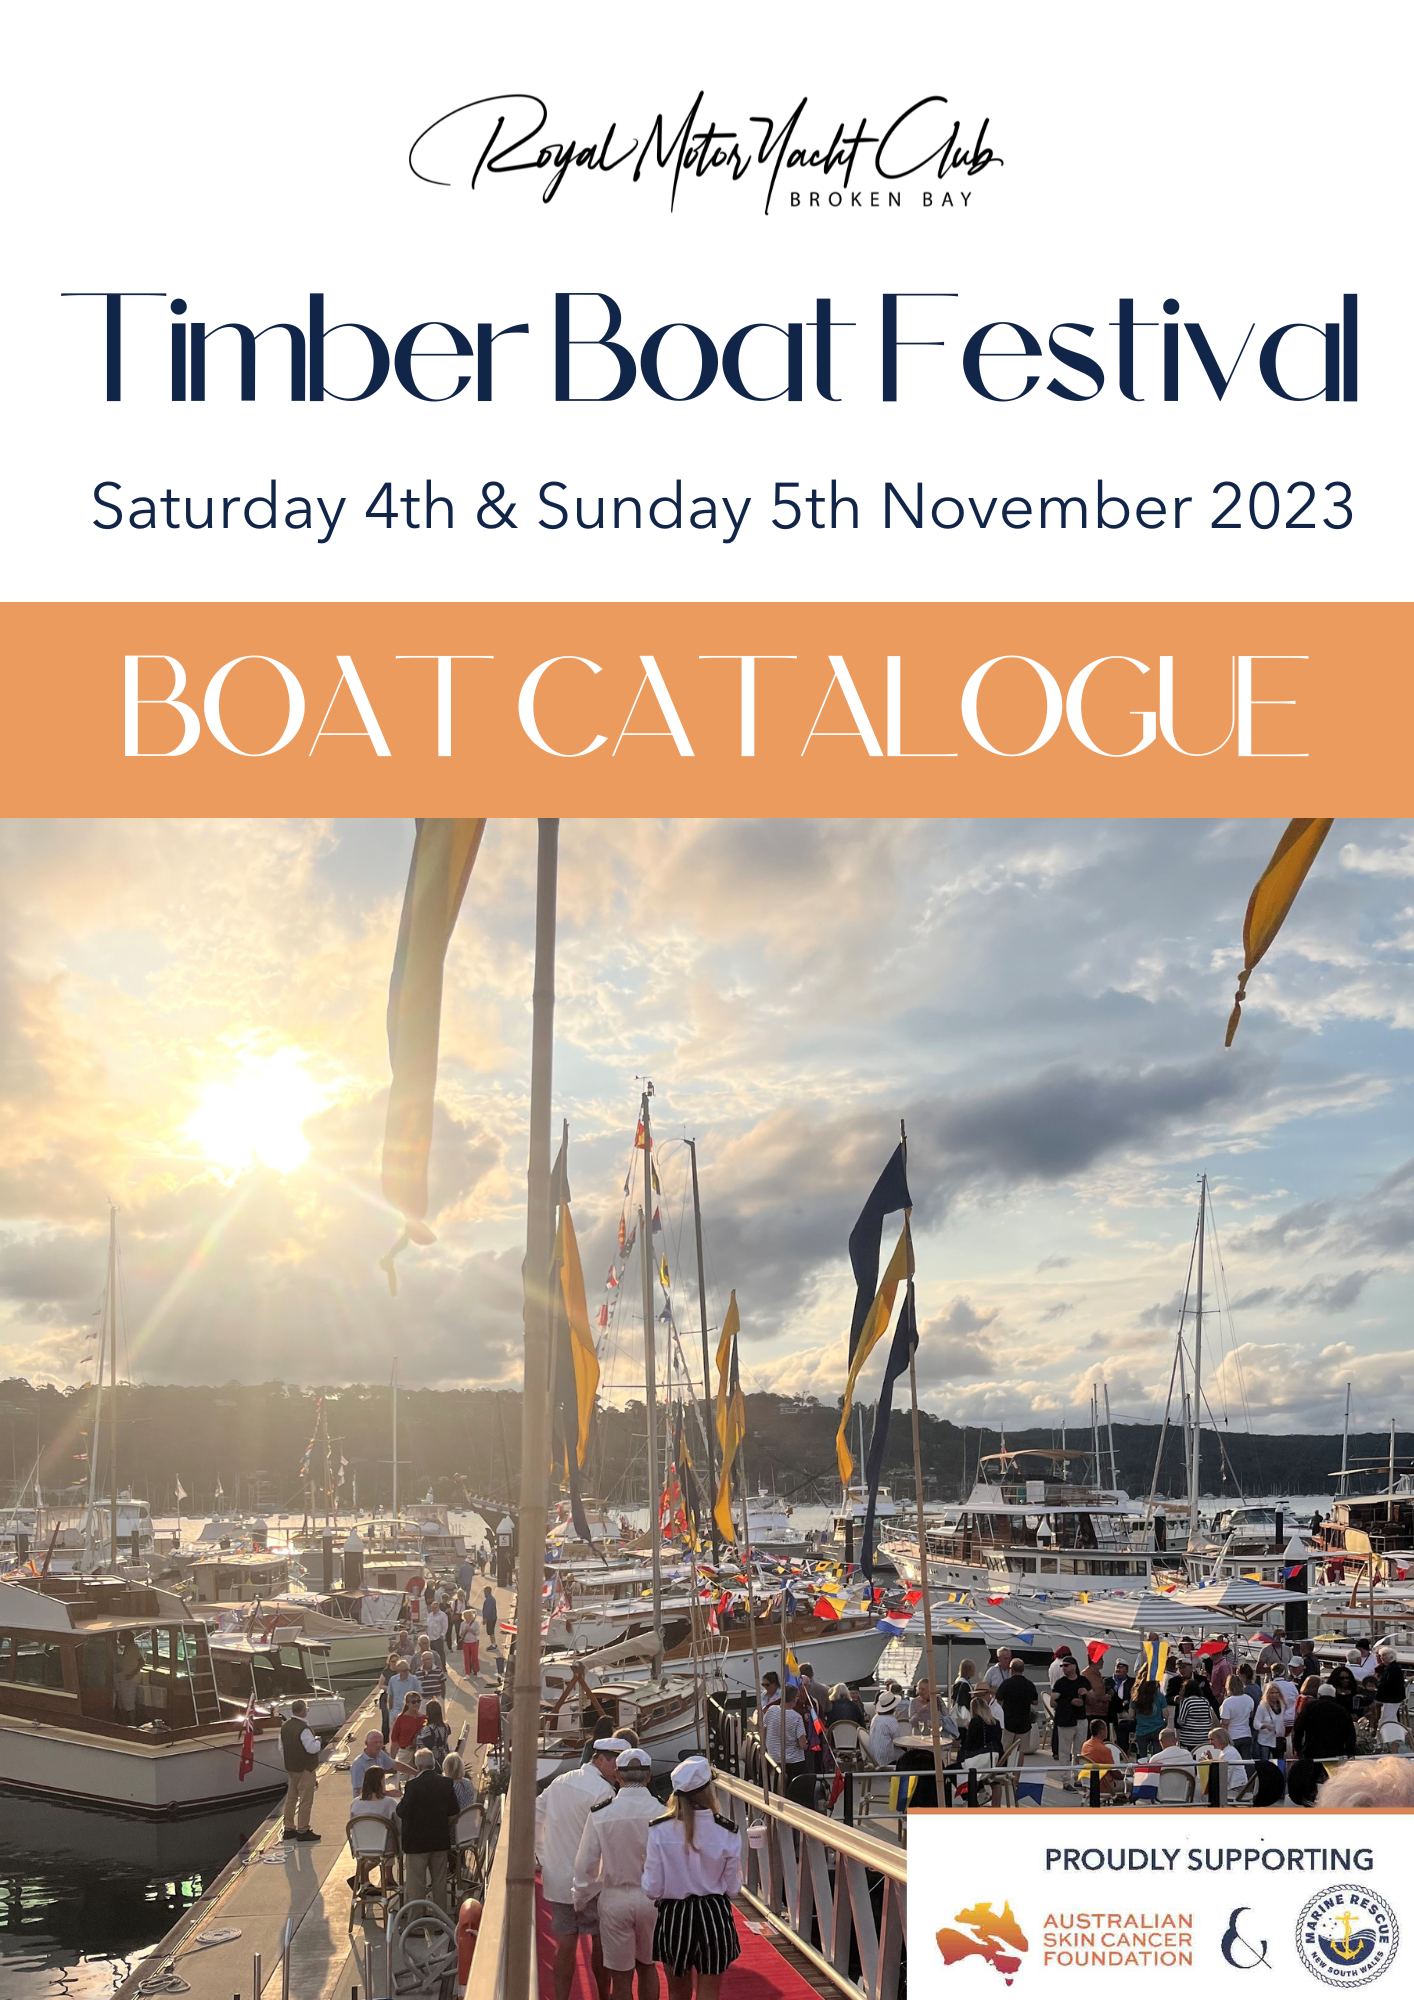 Boat Catalogue | 2023 Timber Boat Festival